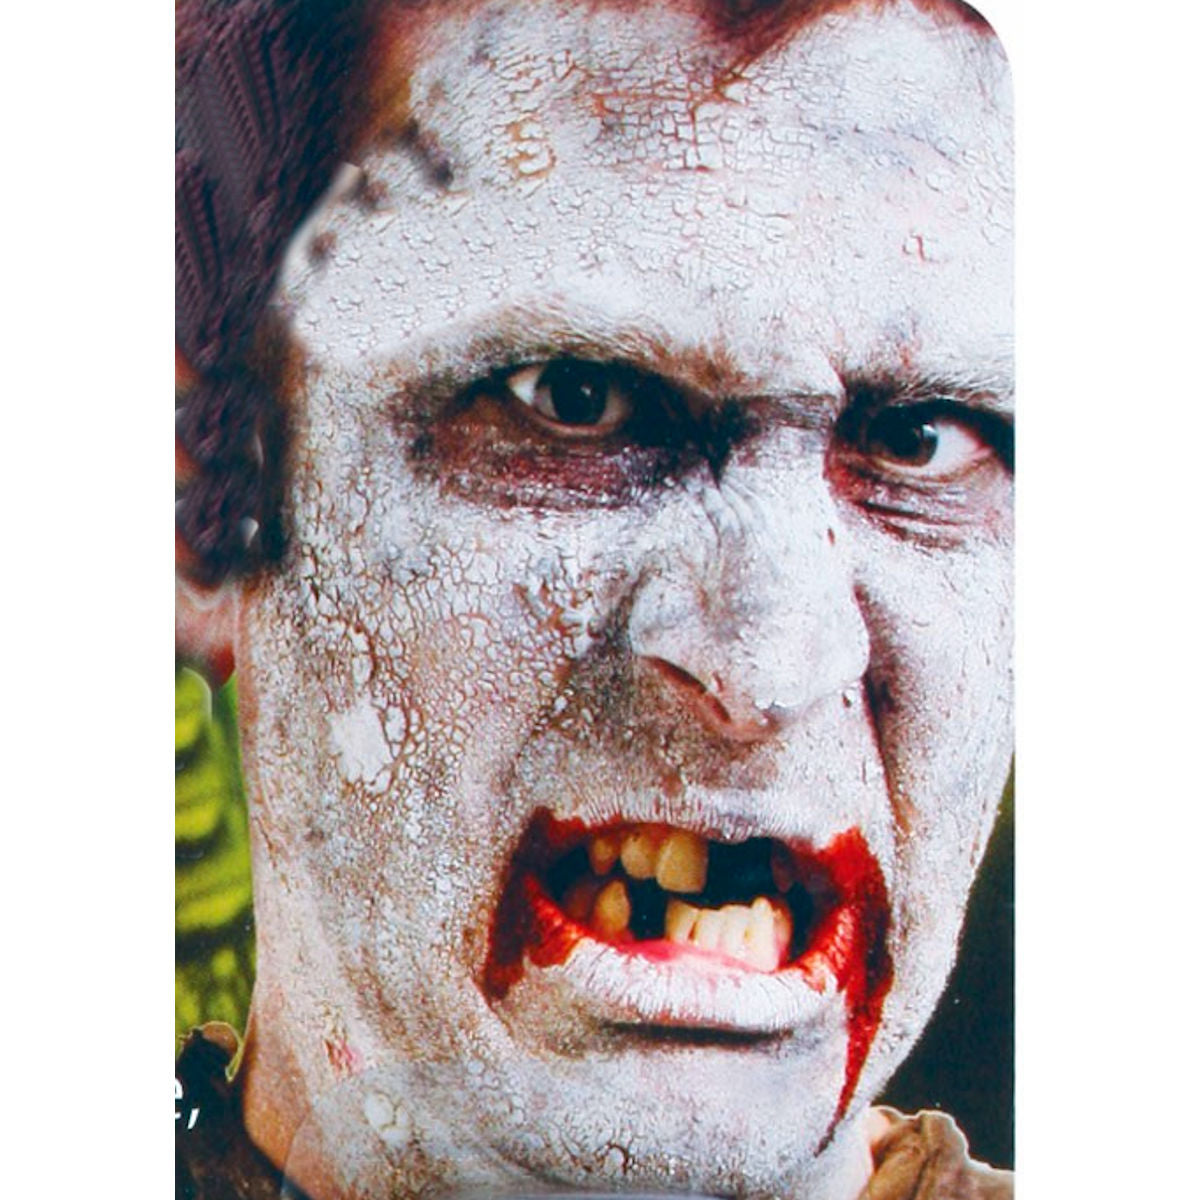 Zombie Flesh Wrinkly, Cracked Peeling Skin Halloween Make up Special FX